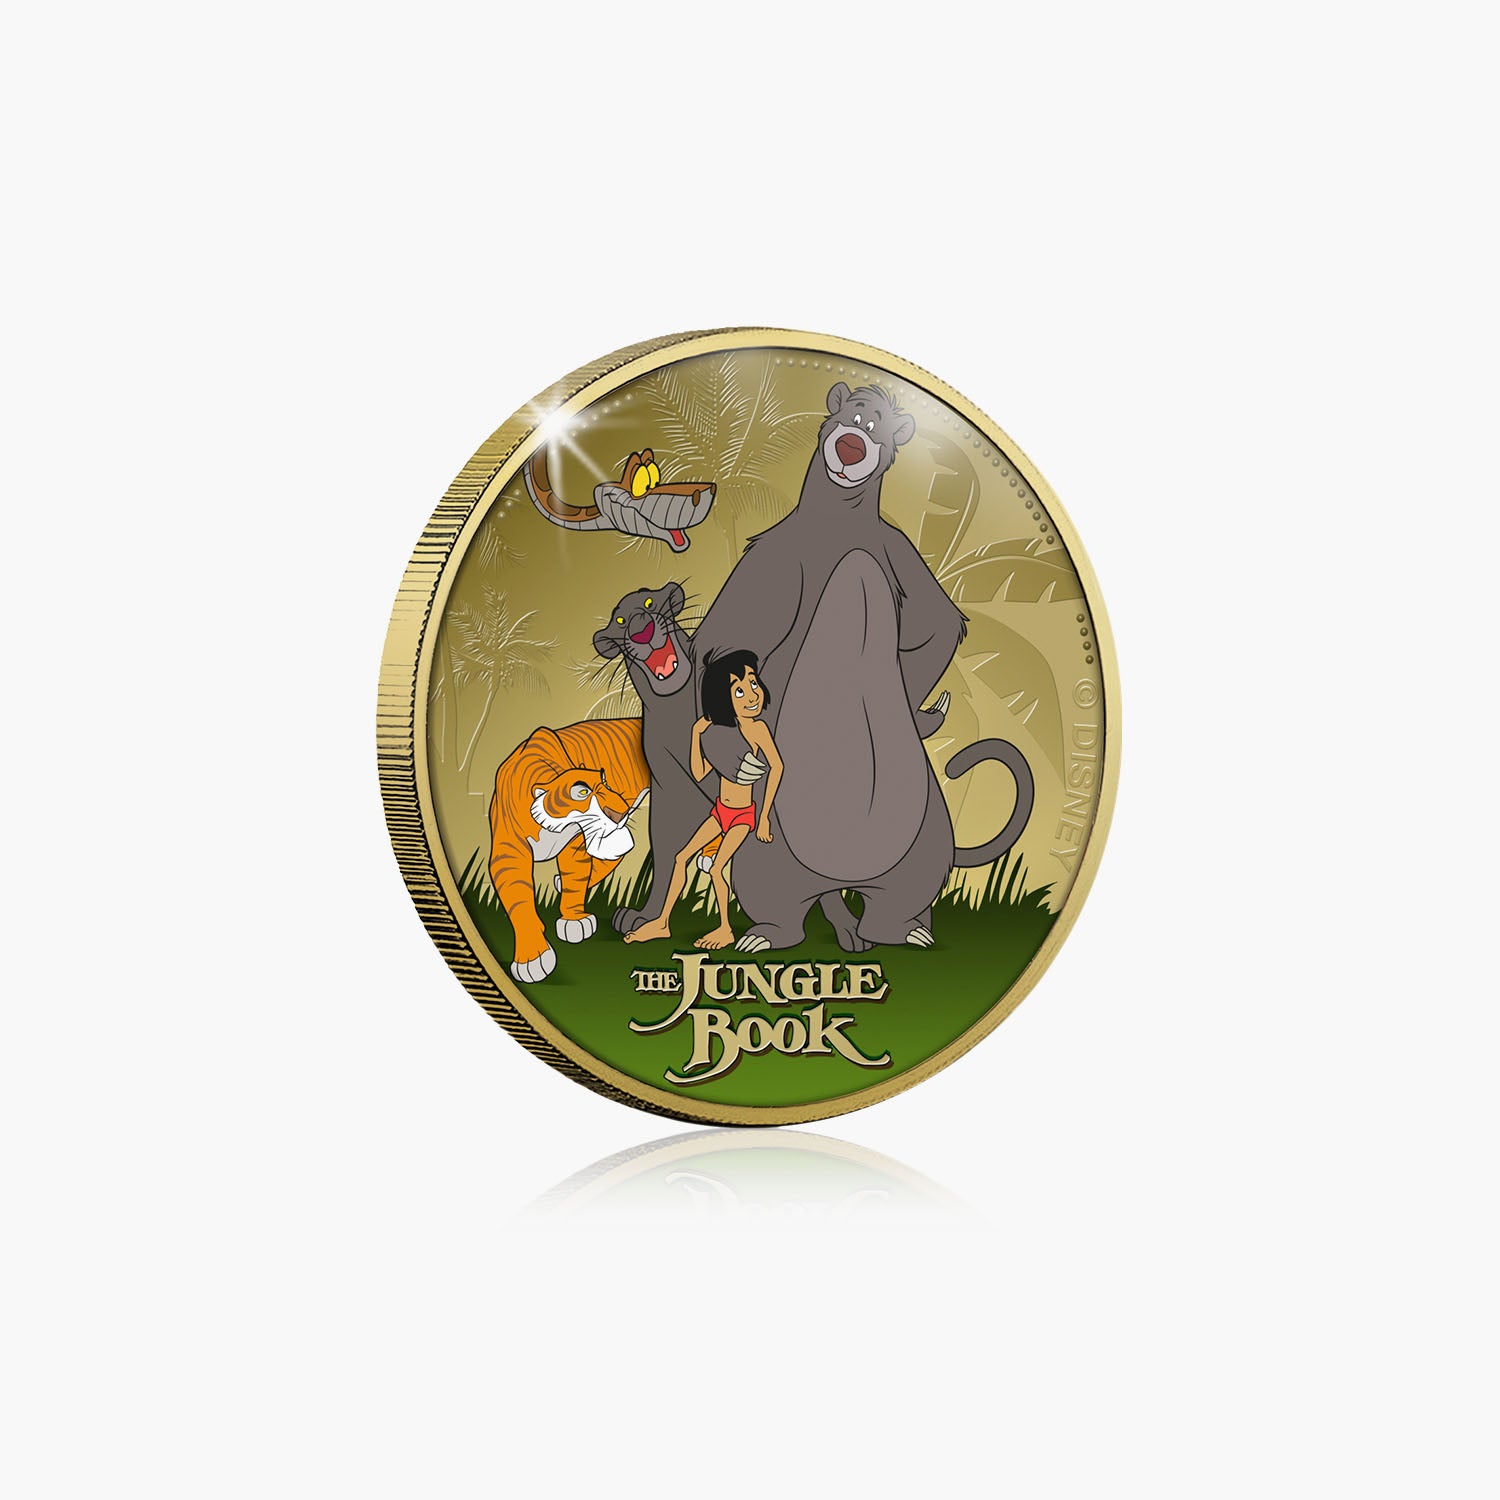 The Jungle Book Gold-Plated Commemorative